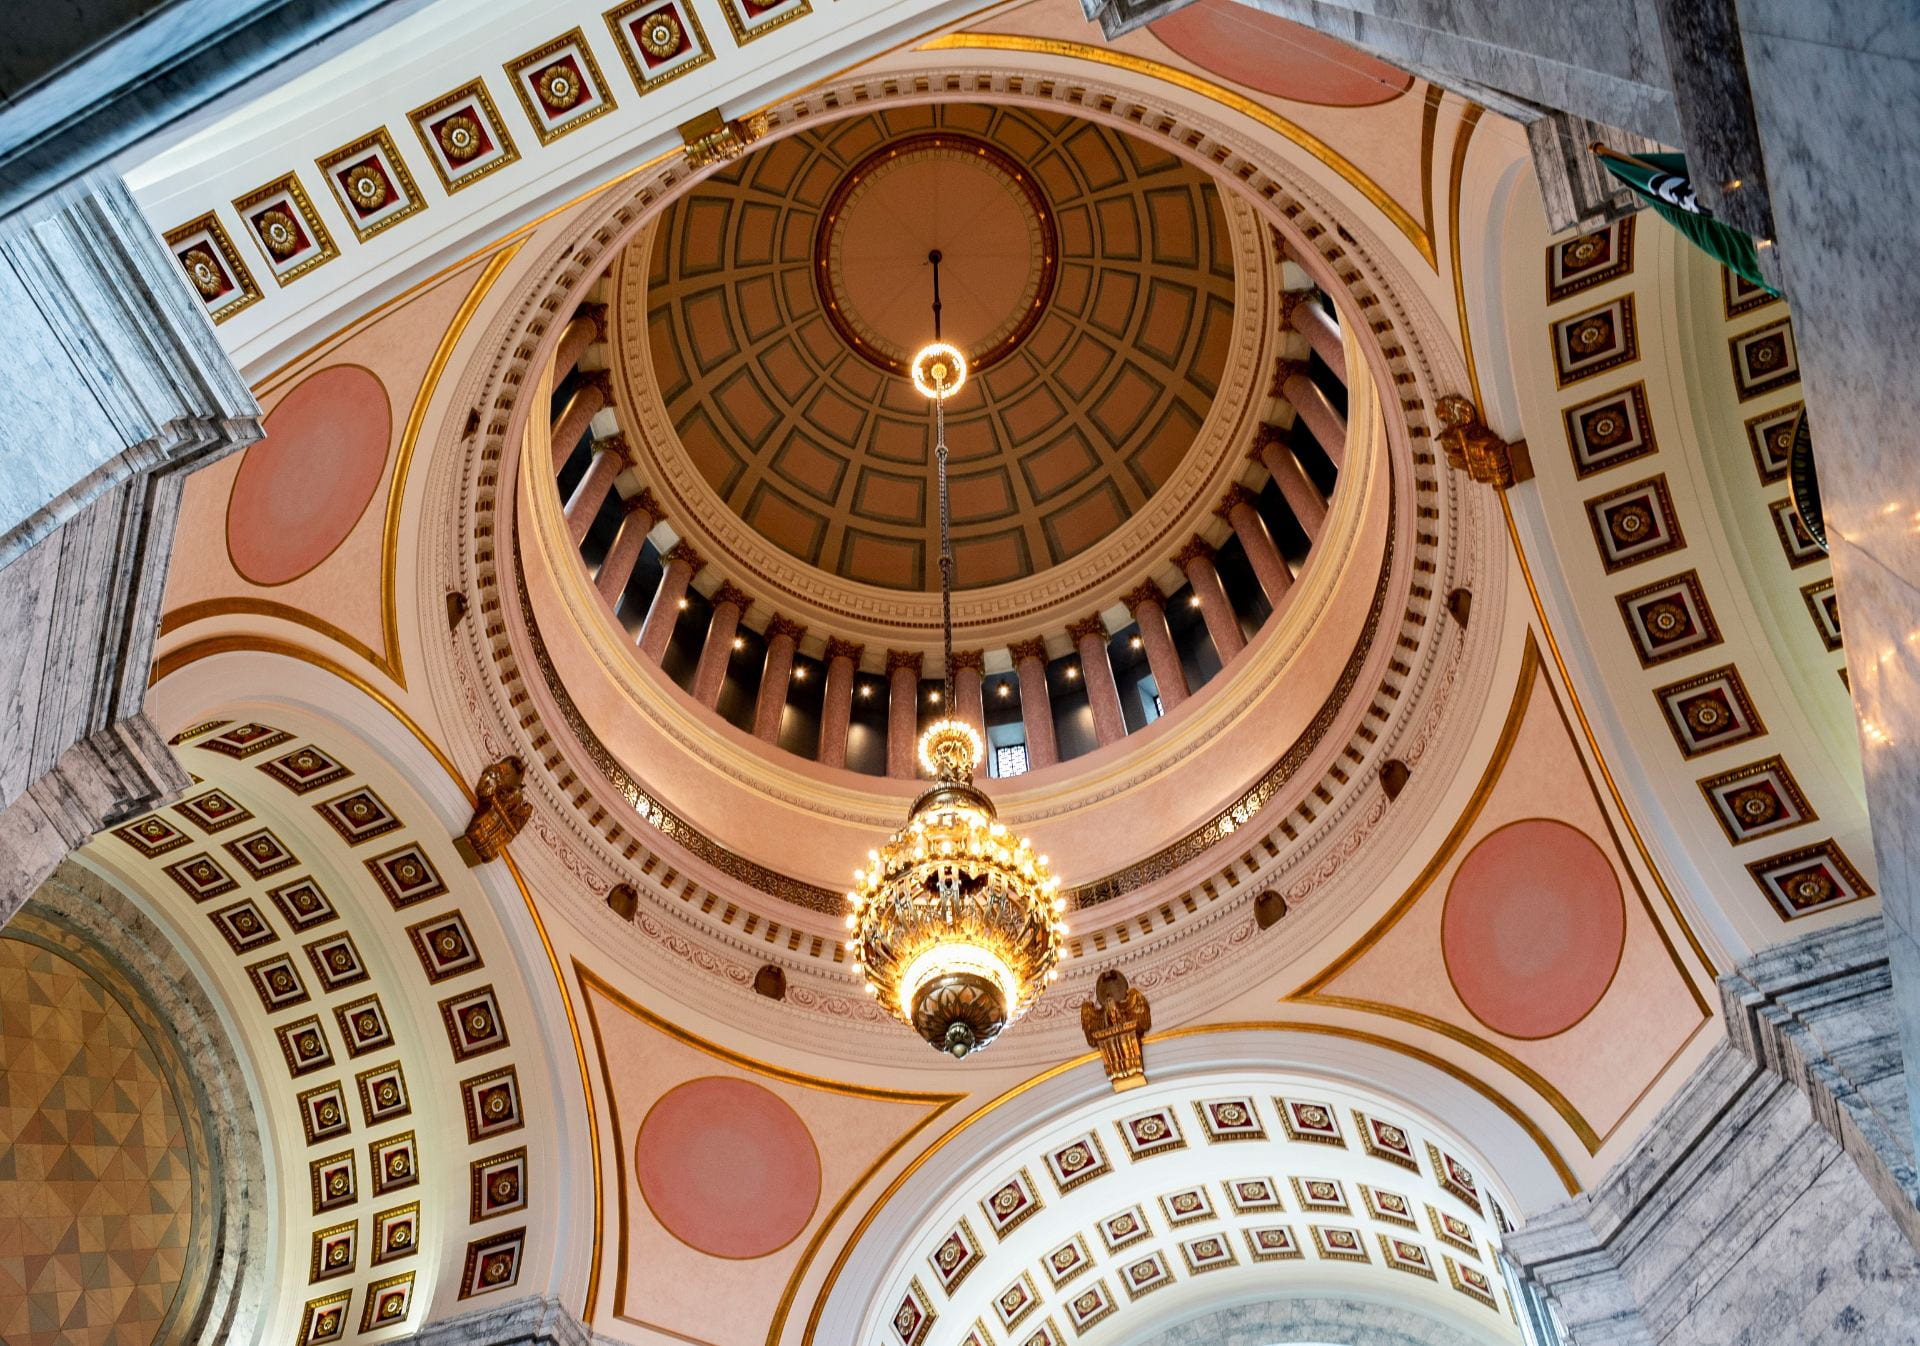 The Rotunda of the Washington State Capitol in Olympia.